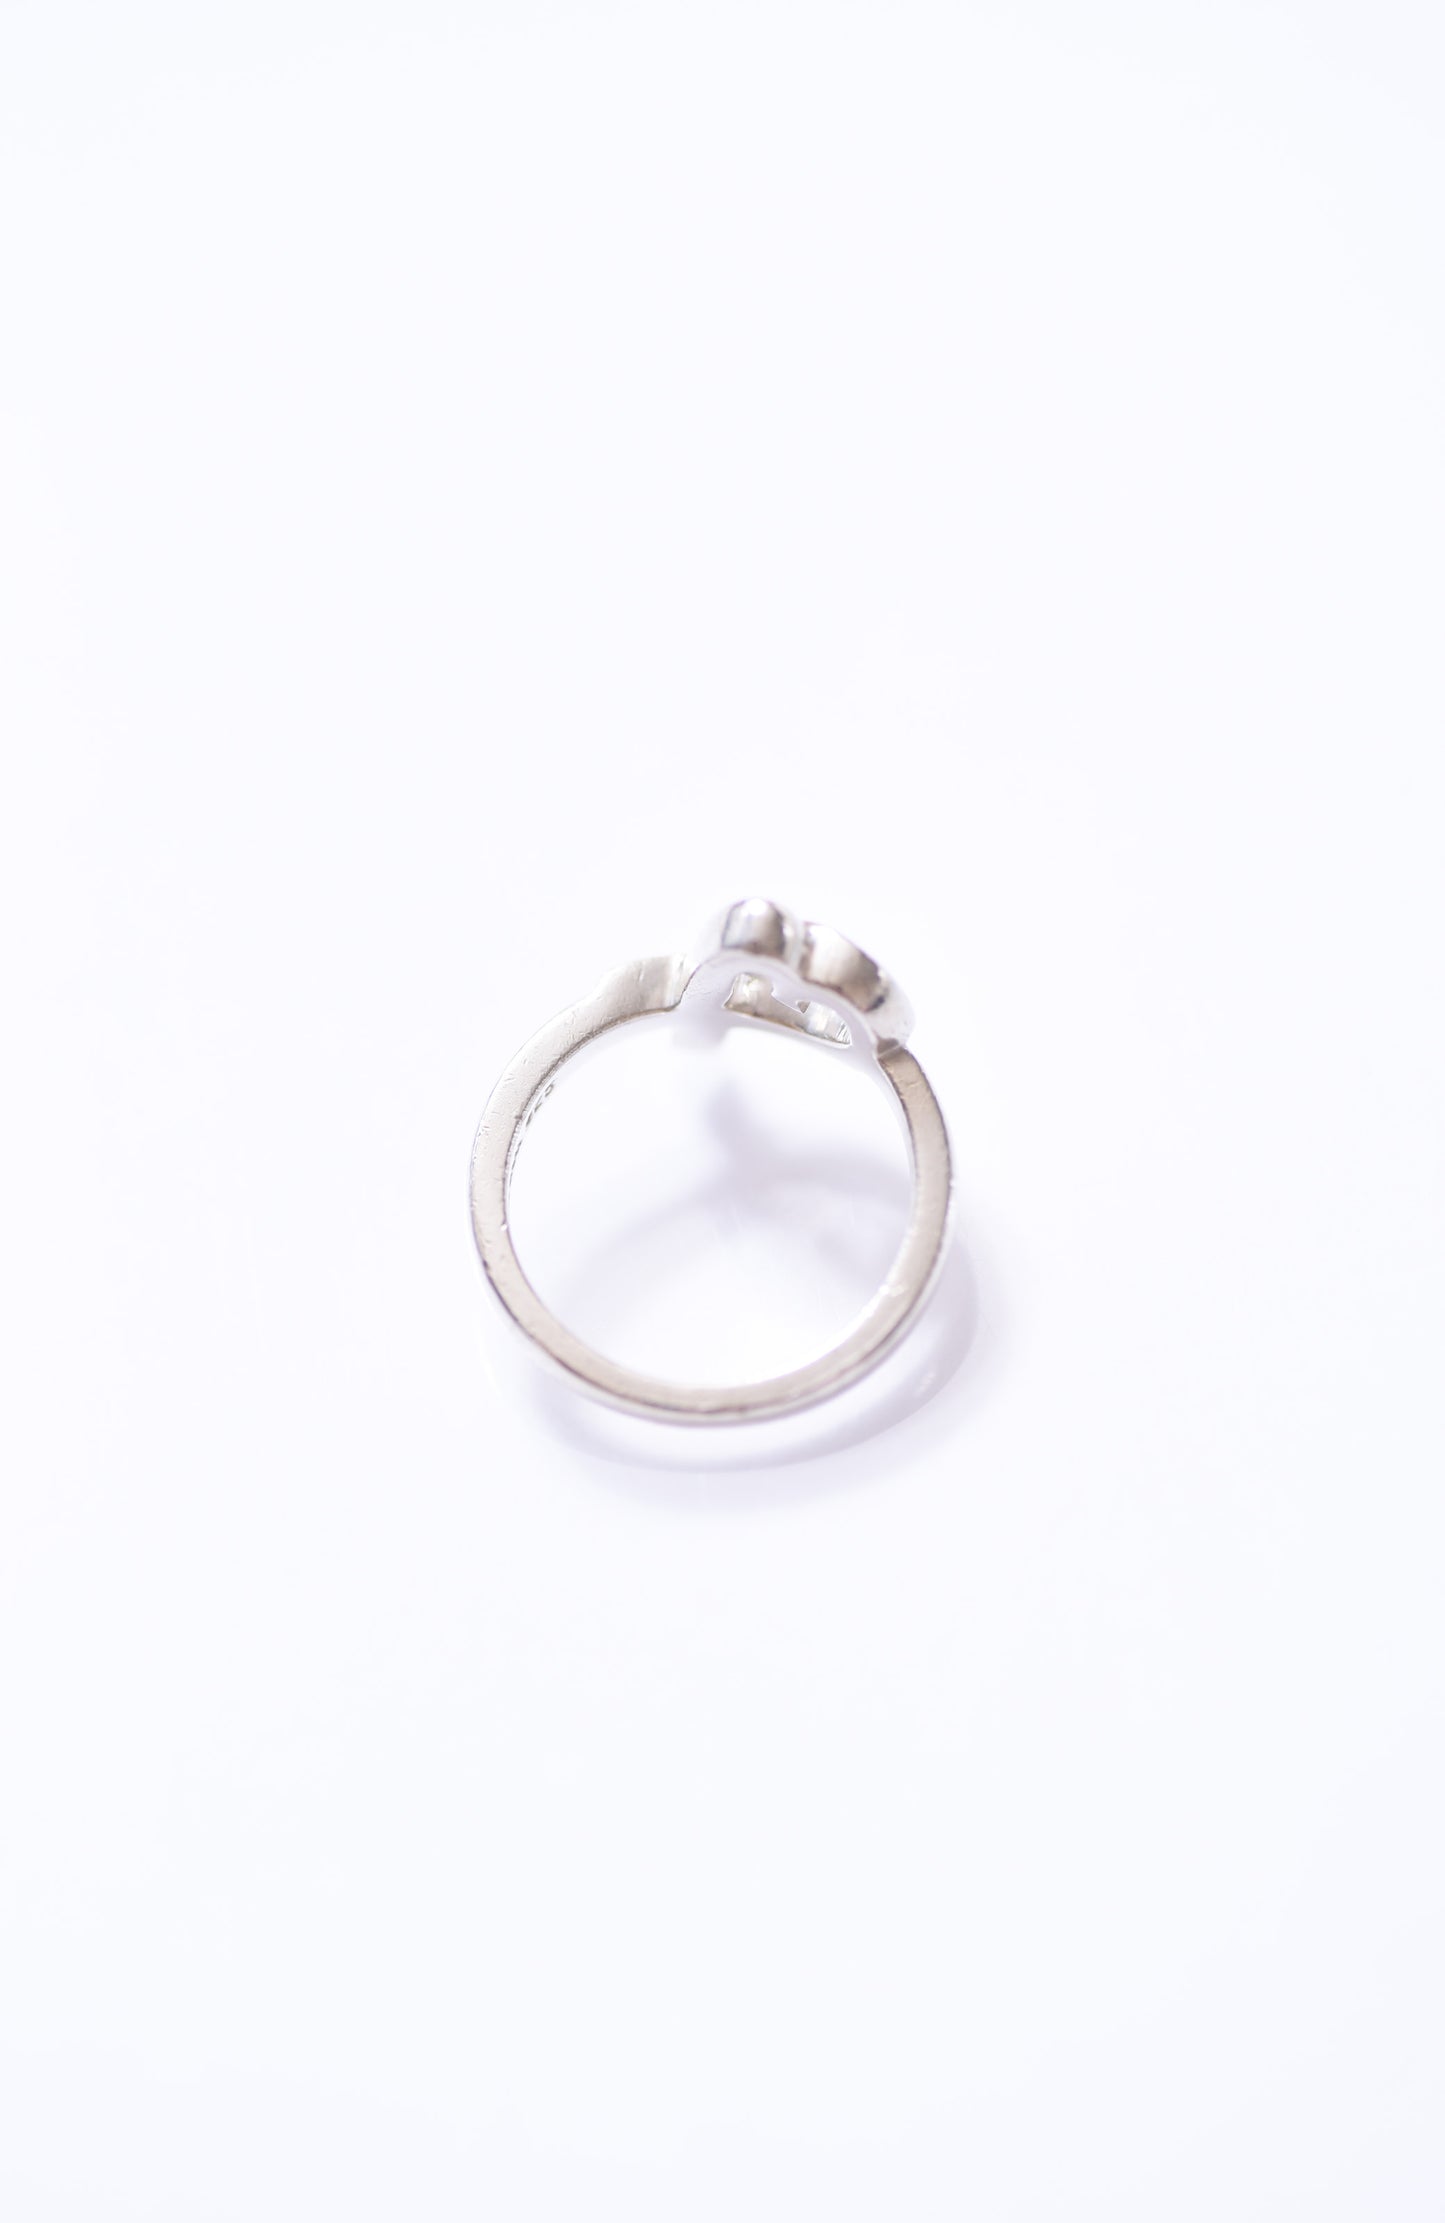 Tiffany,co vintage heart ring